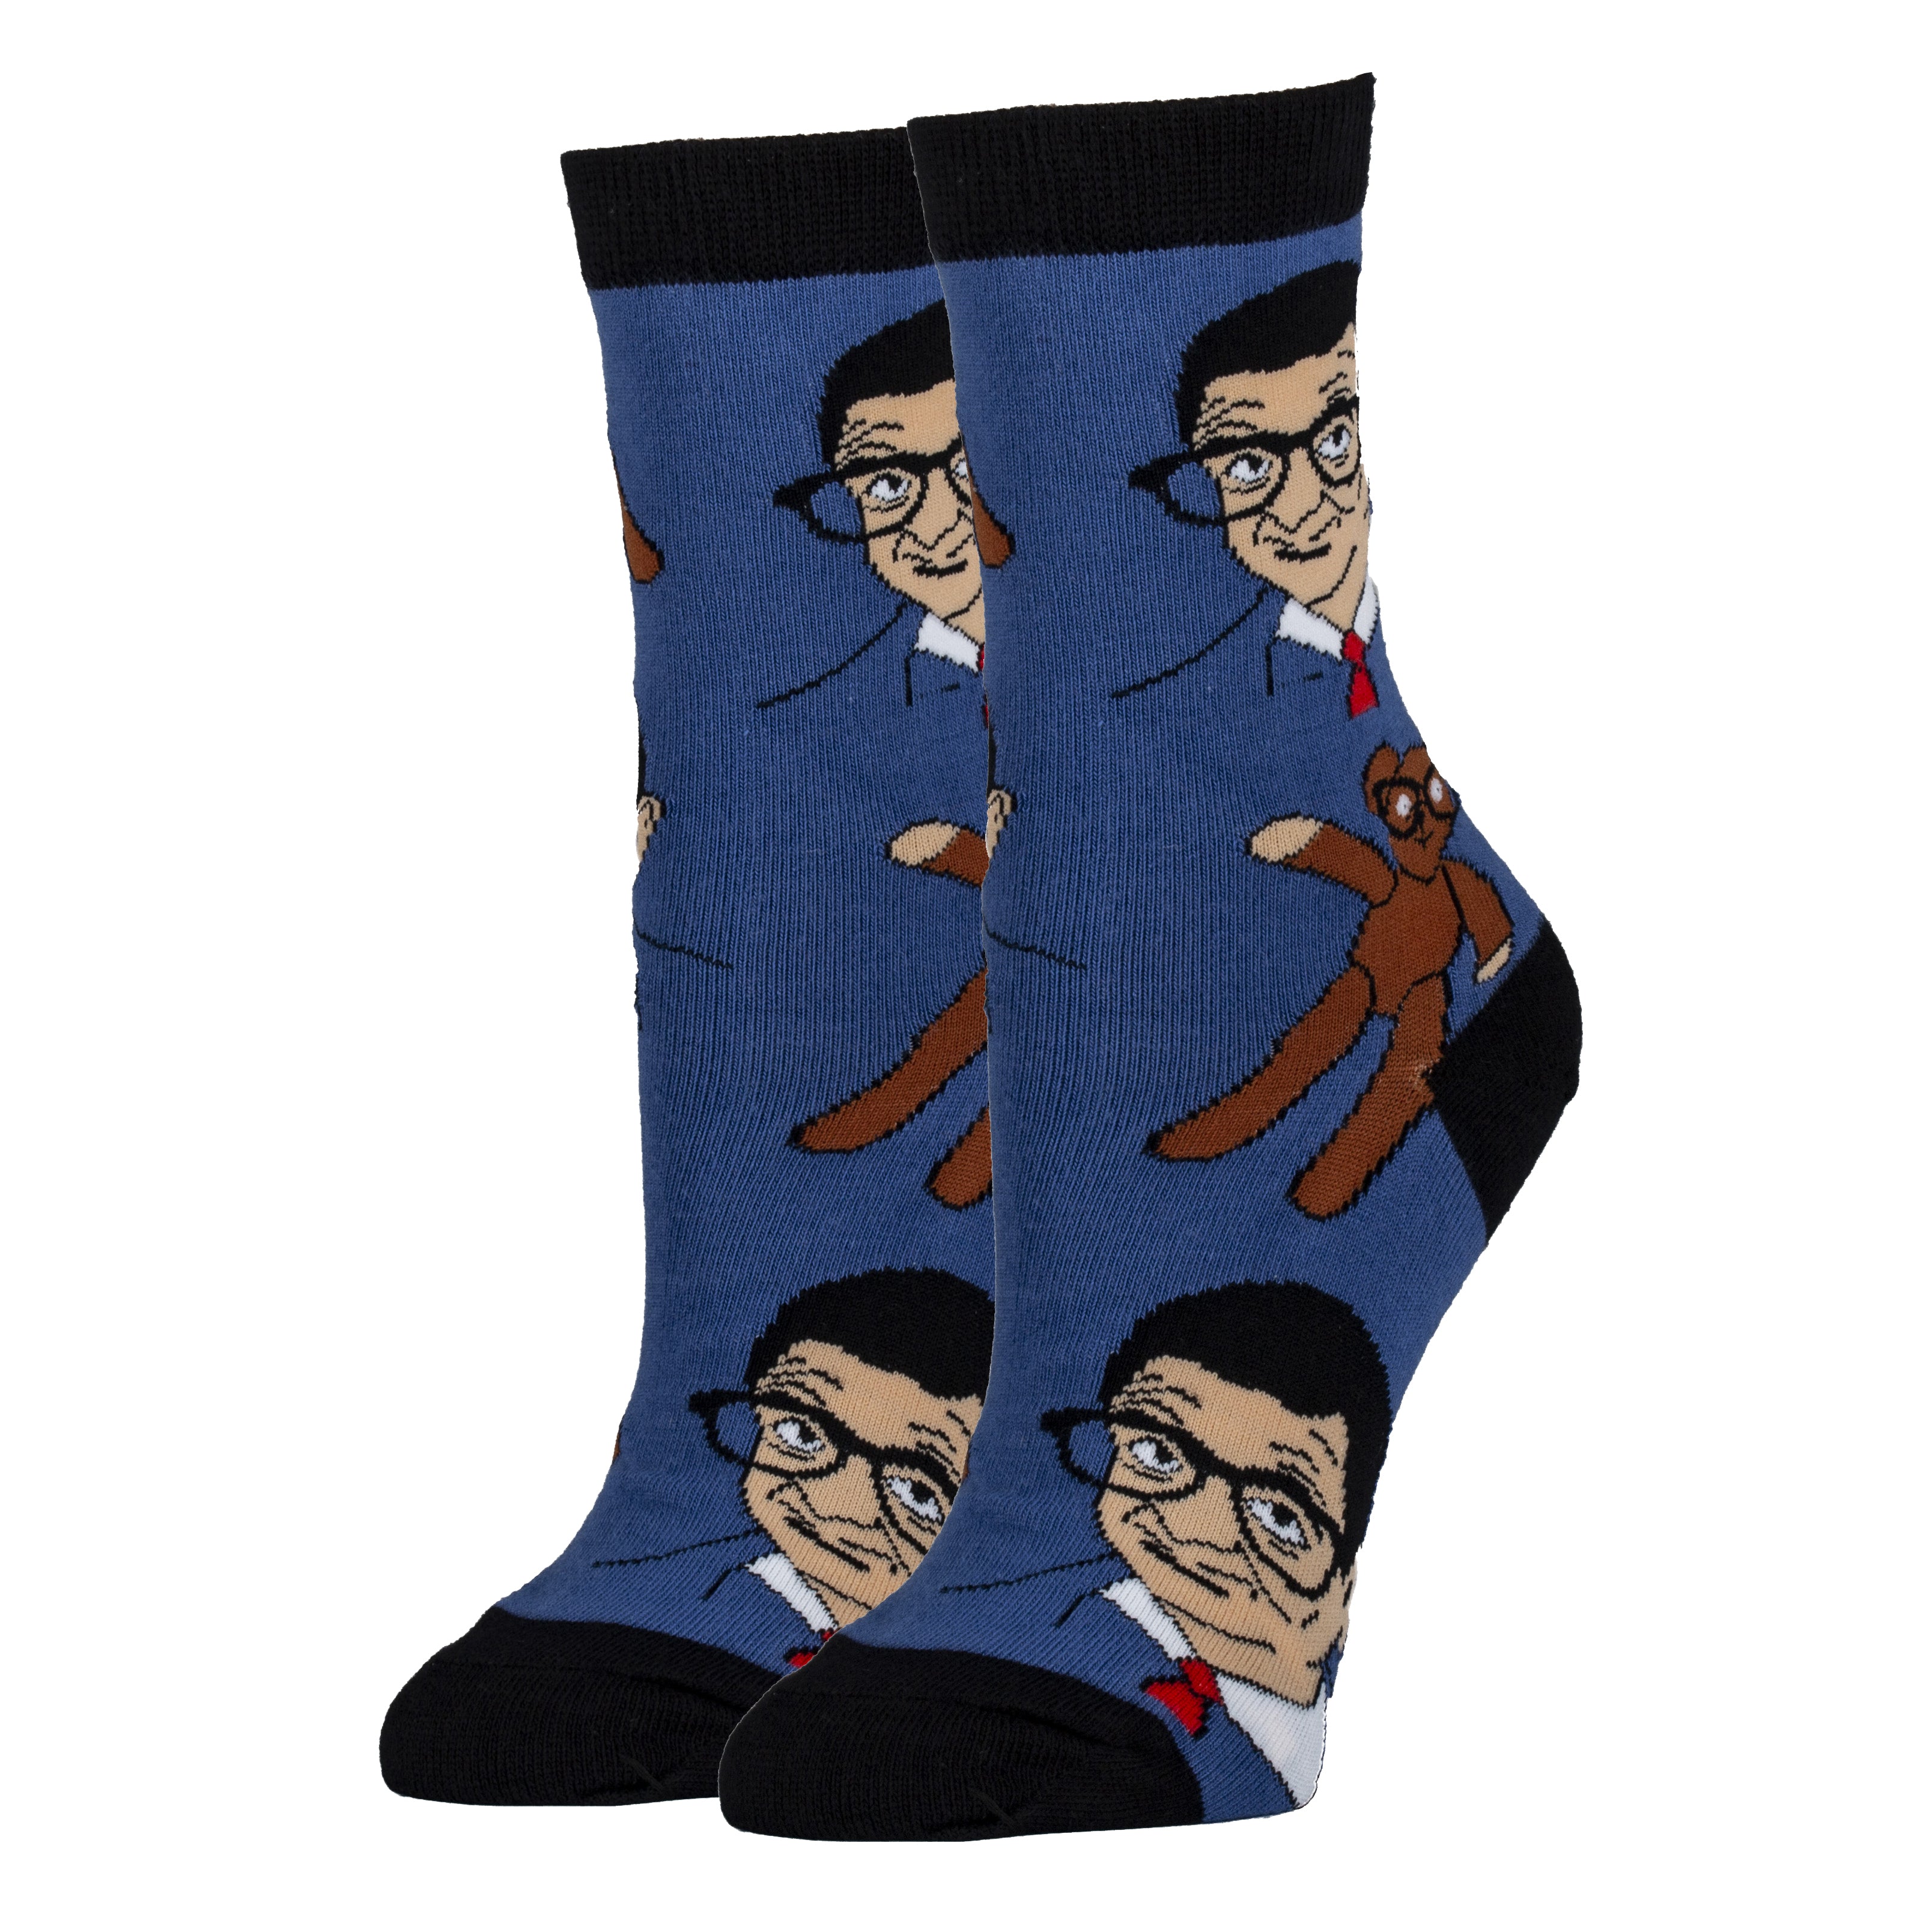 Mr Bean and Teddy Blue Socks | Fun Socks For Women